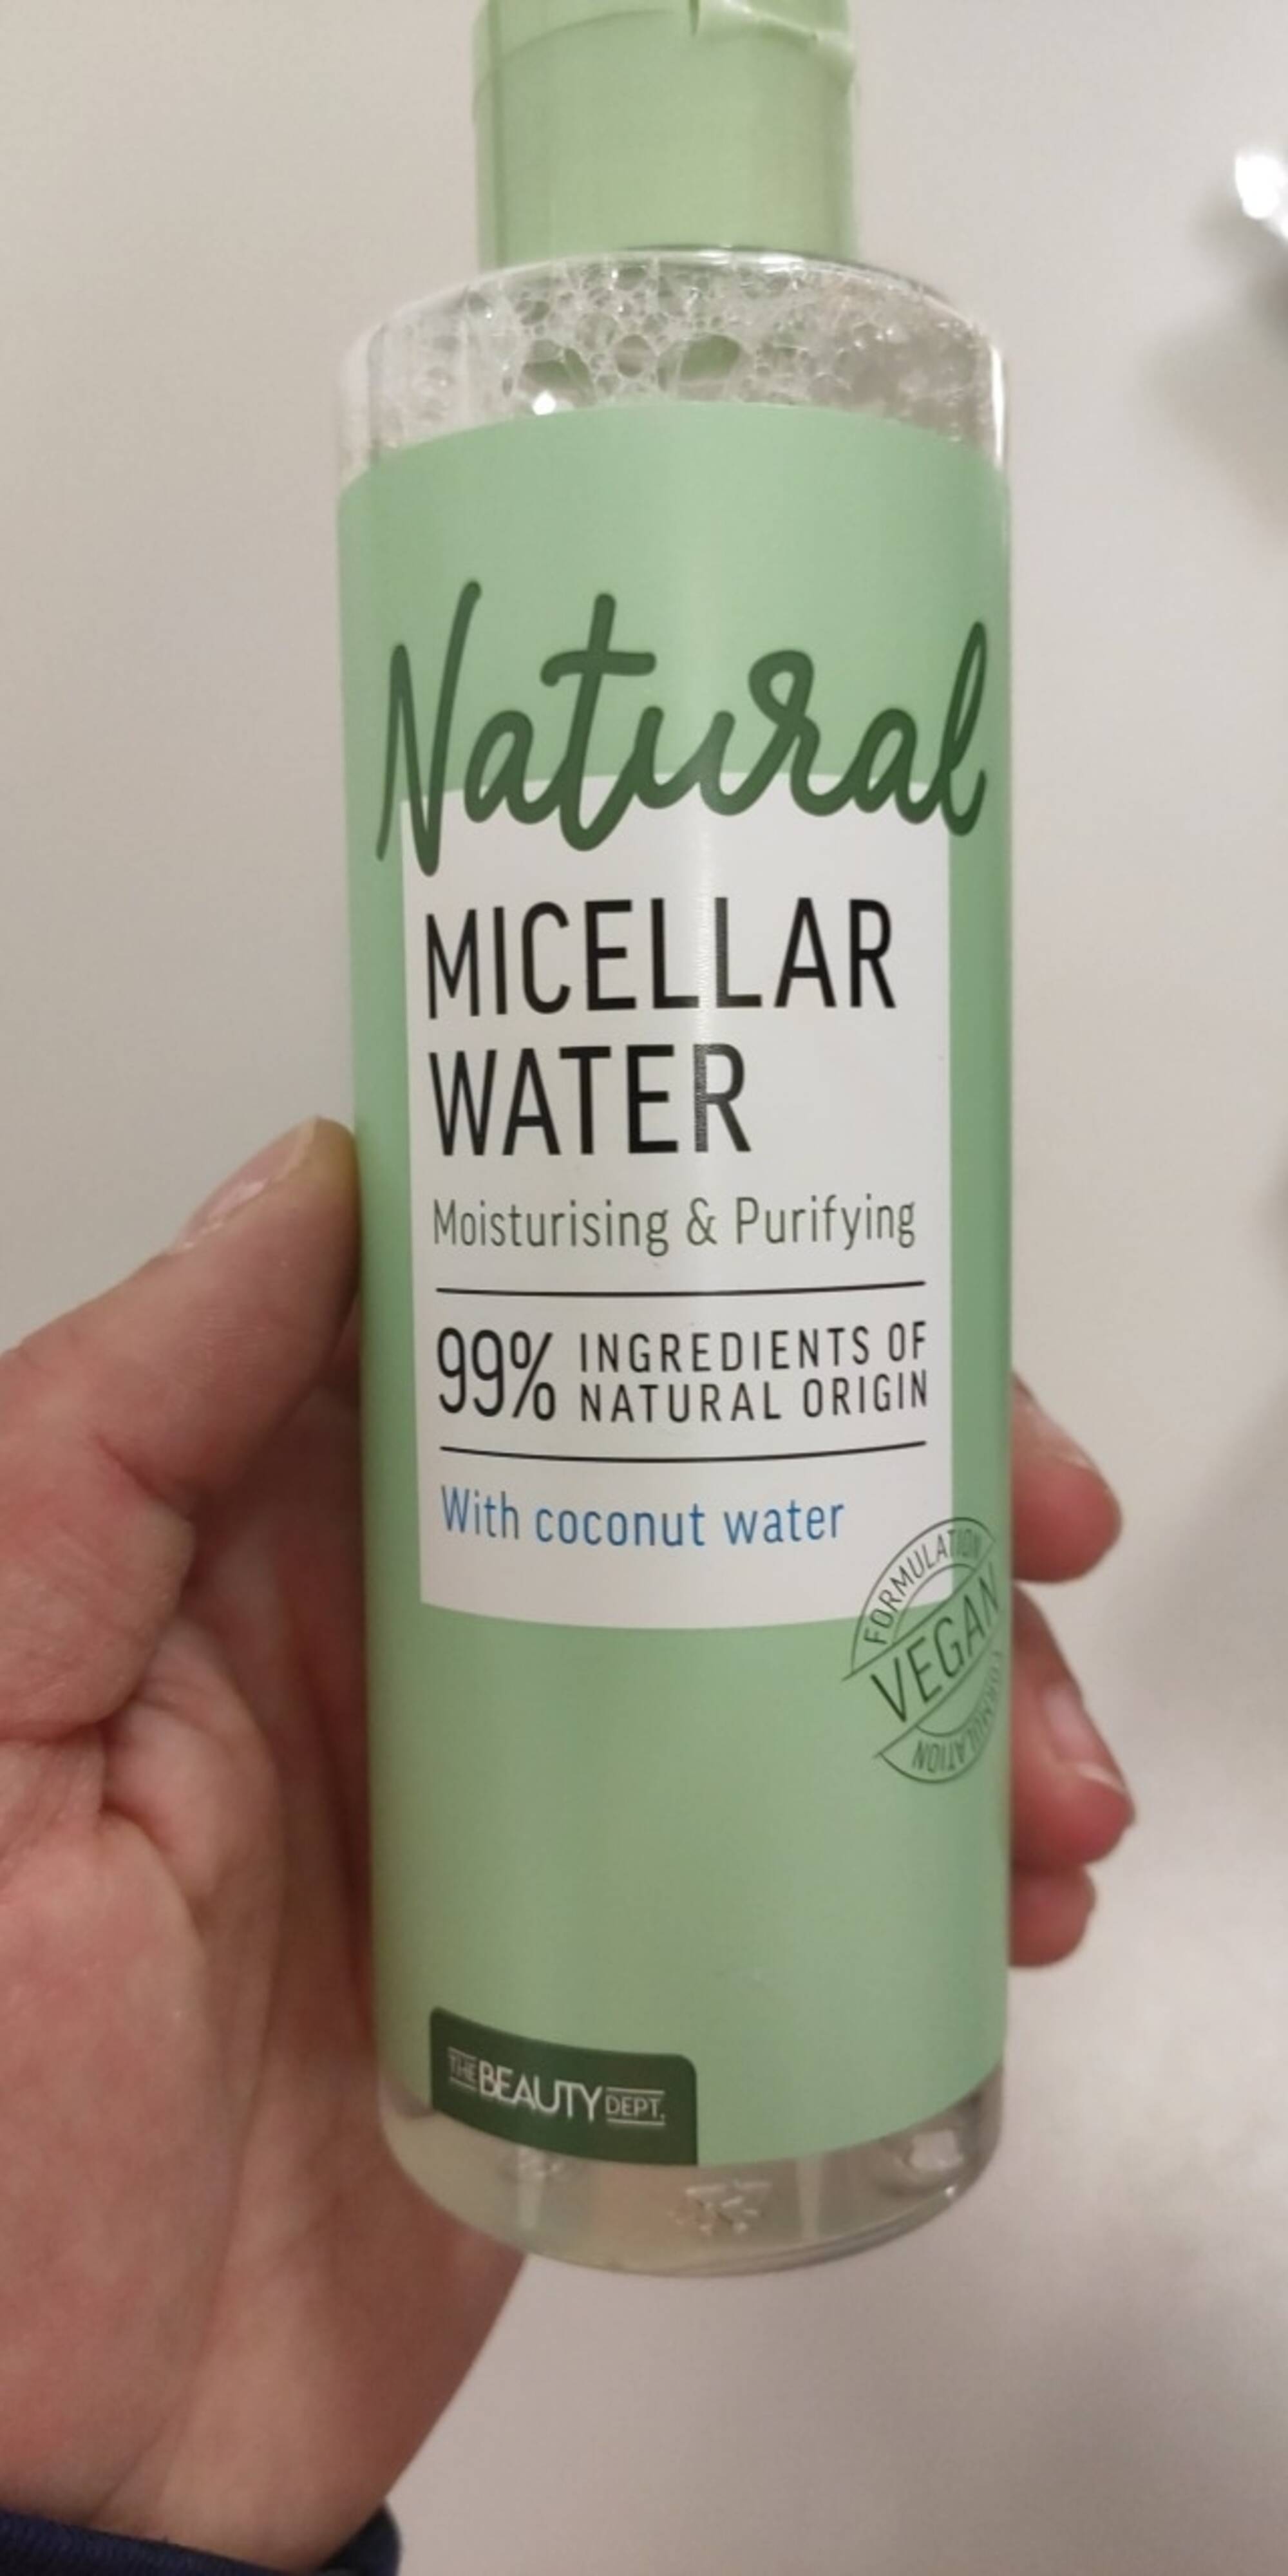 THE BEAUTY DEPT - Natural - Micellar water